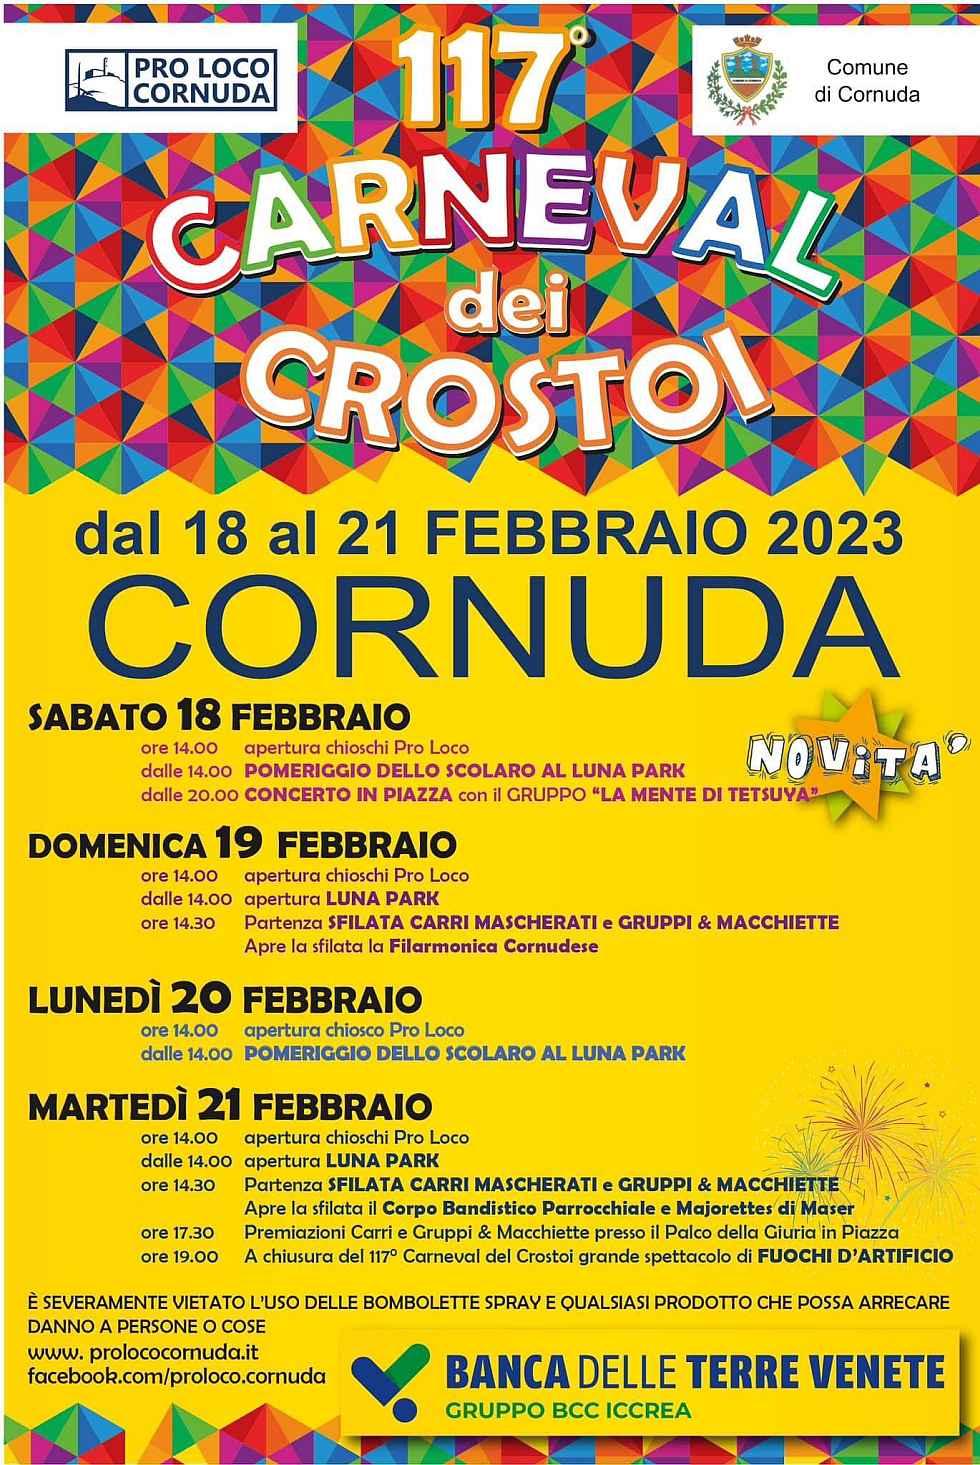 Cornuda (TV)
"117° Carneval dei Crostoi"
dal 18 al 21 Febbraio 2023